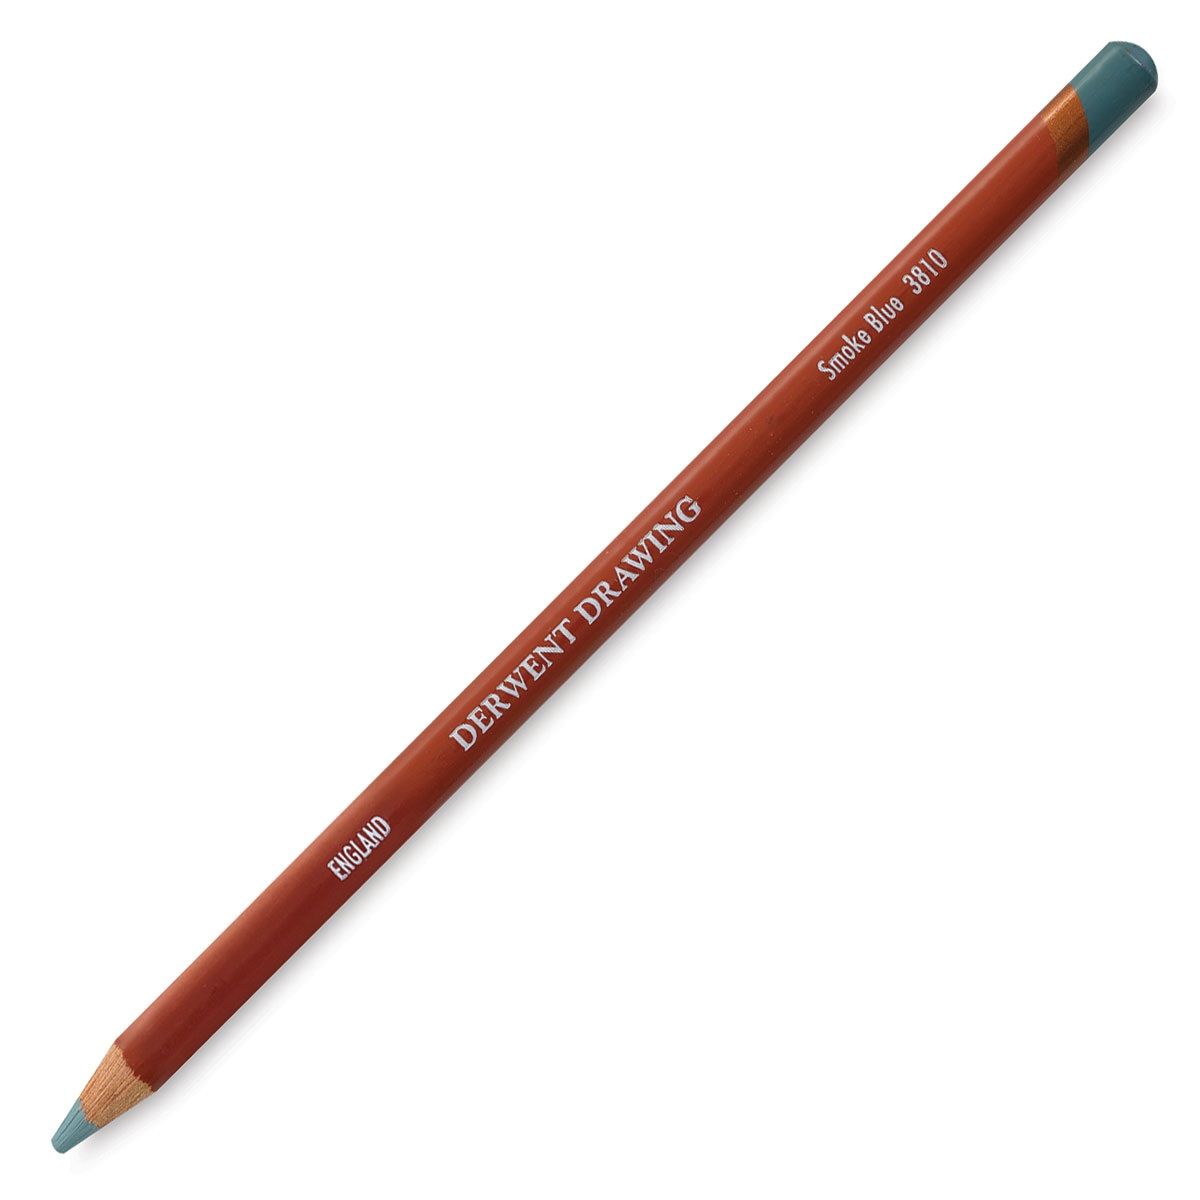 Derwent Drawing Pencil - Smoke Blue